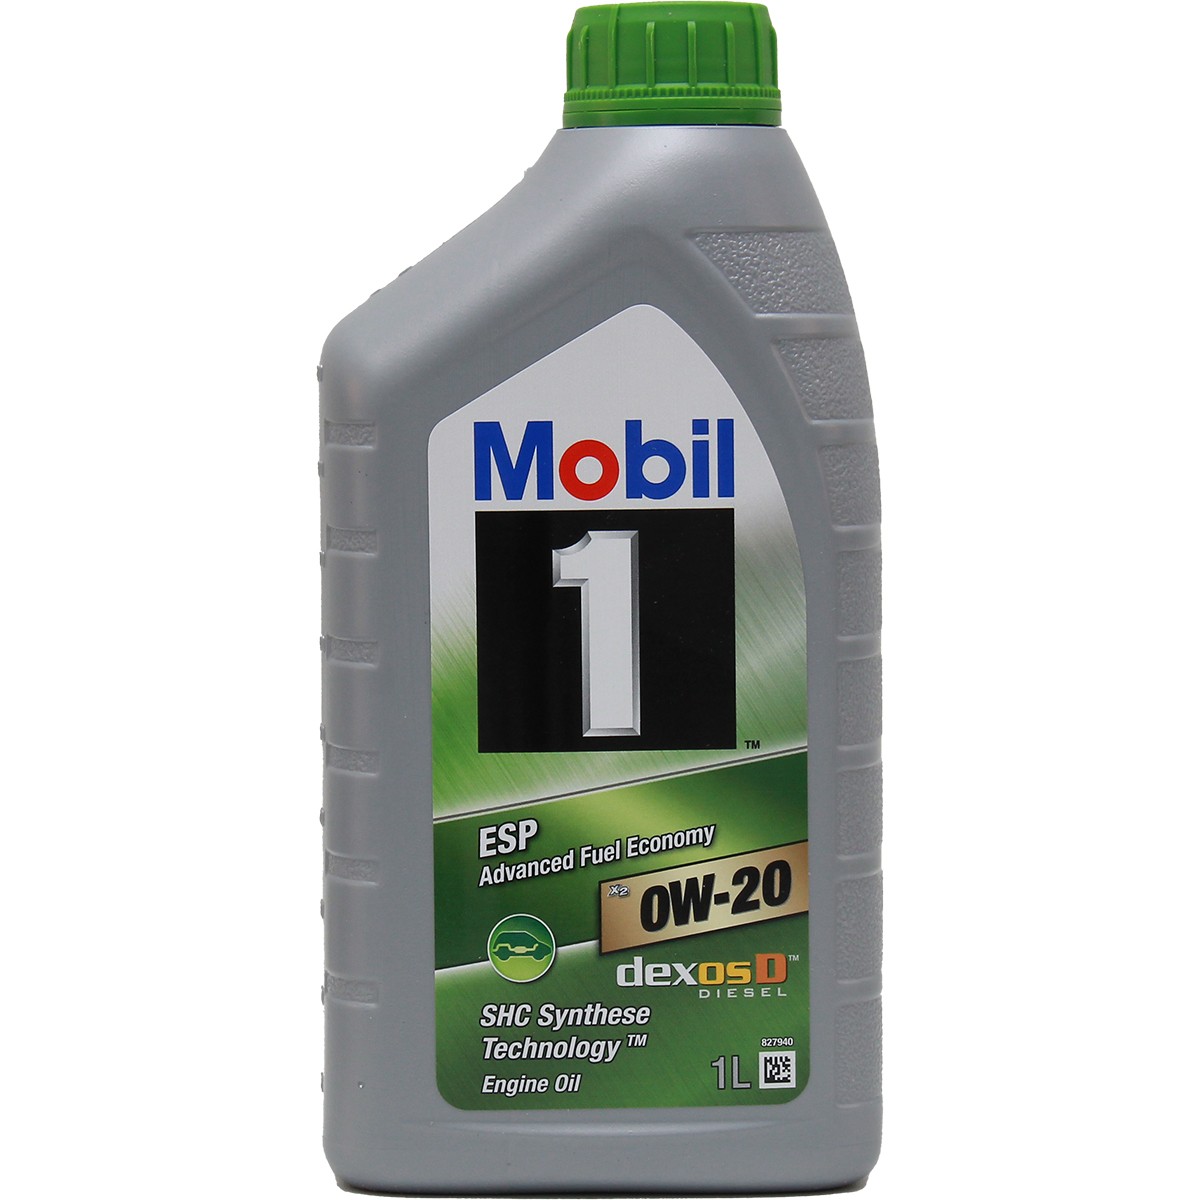 Motor oil MOBIL 0W-20, 1l, Synthetic Oil longlife 153437